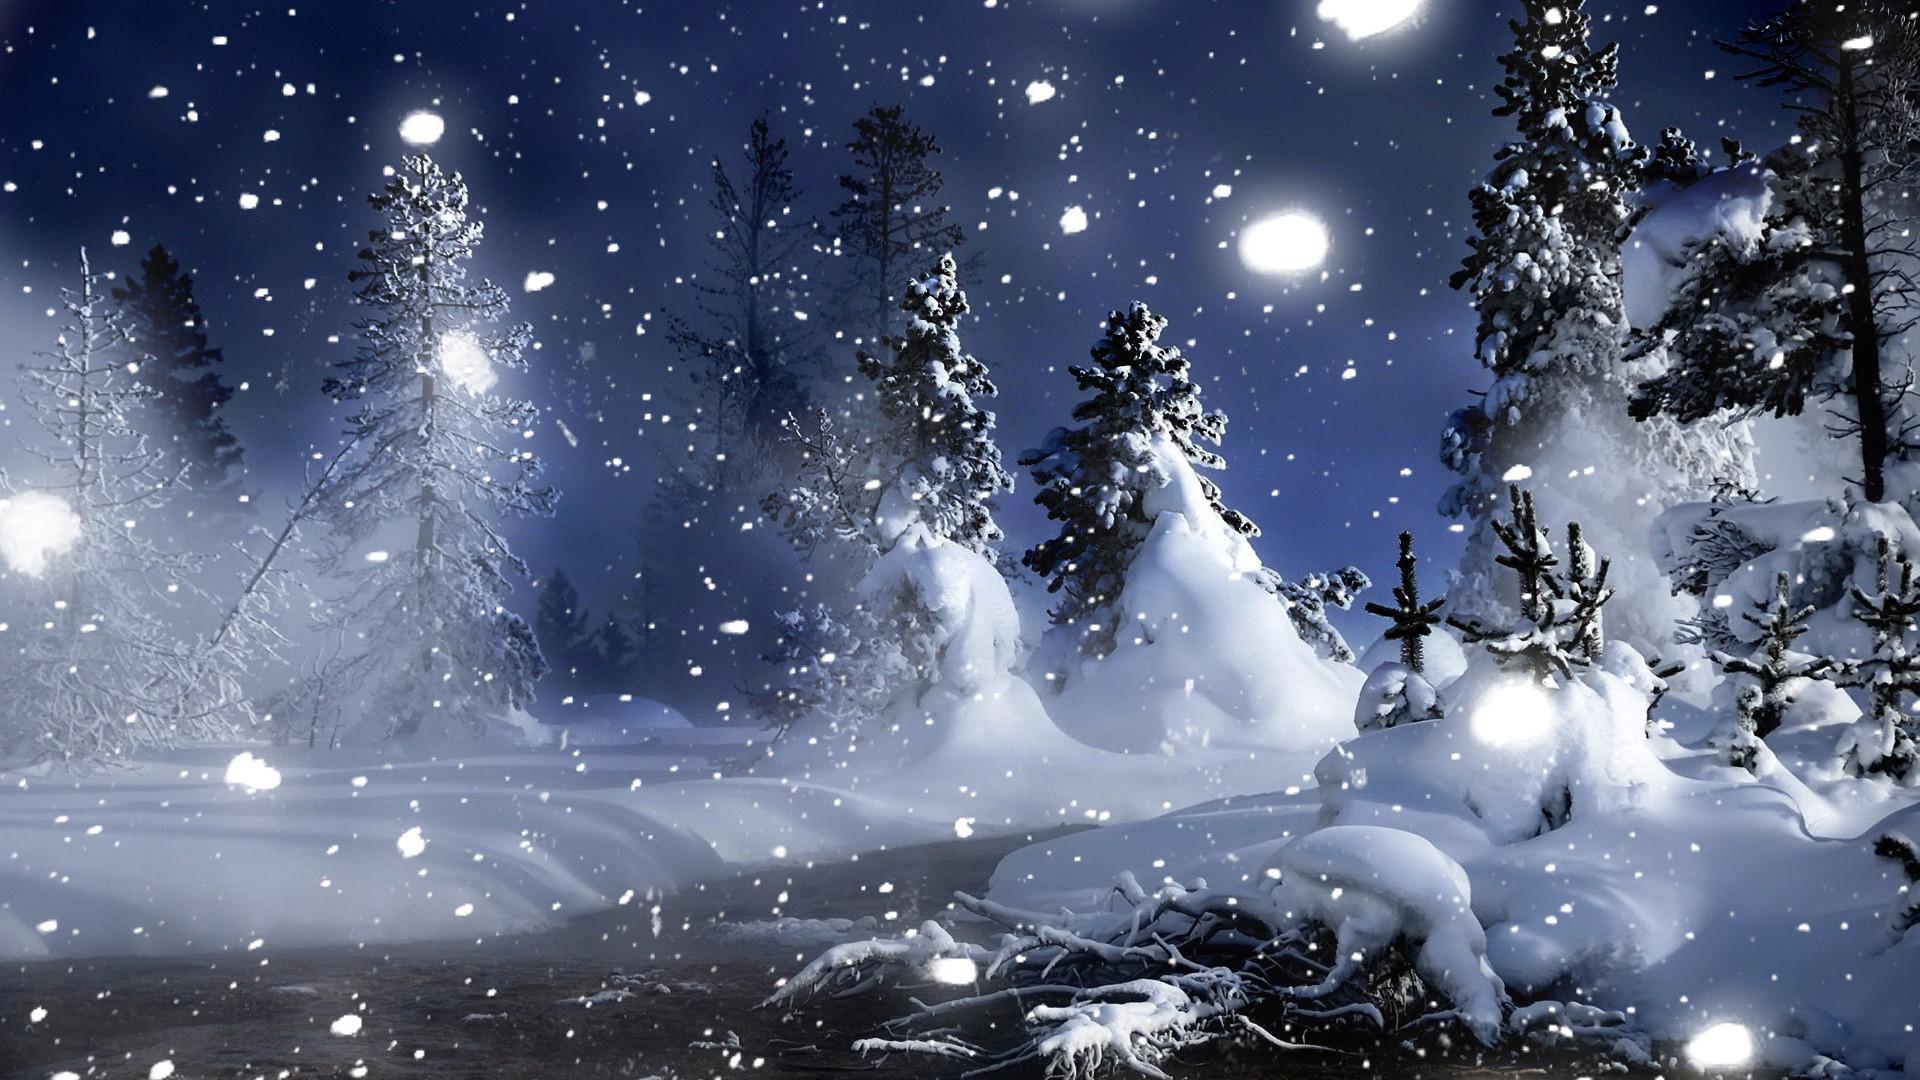 3D Winter Night Snow Desktop Wallpaper Snow Image